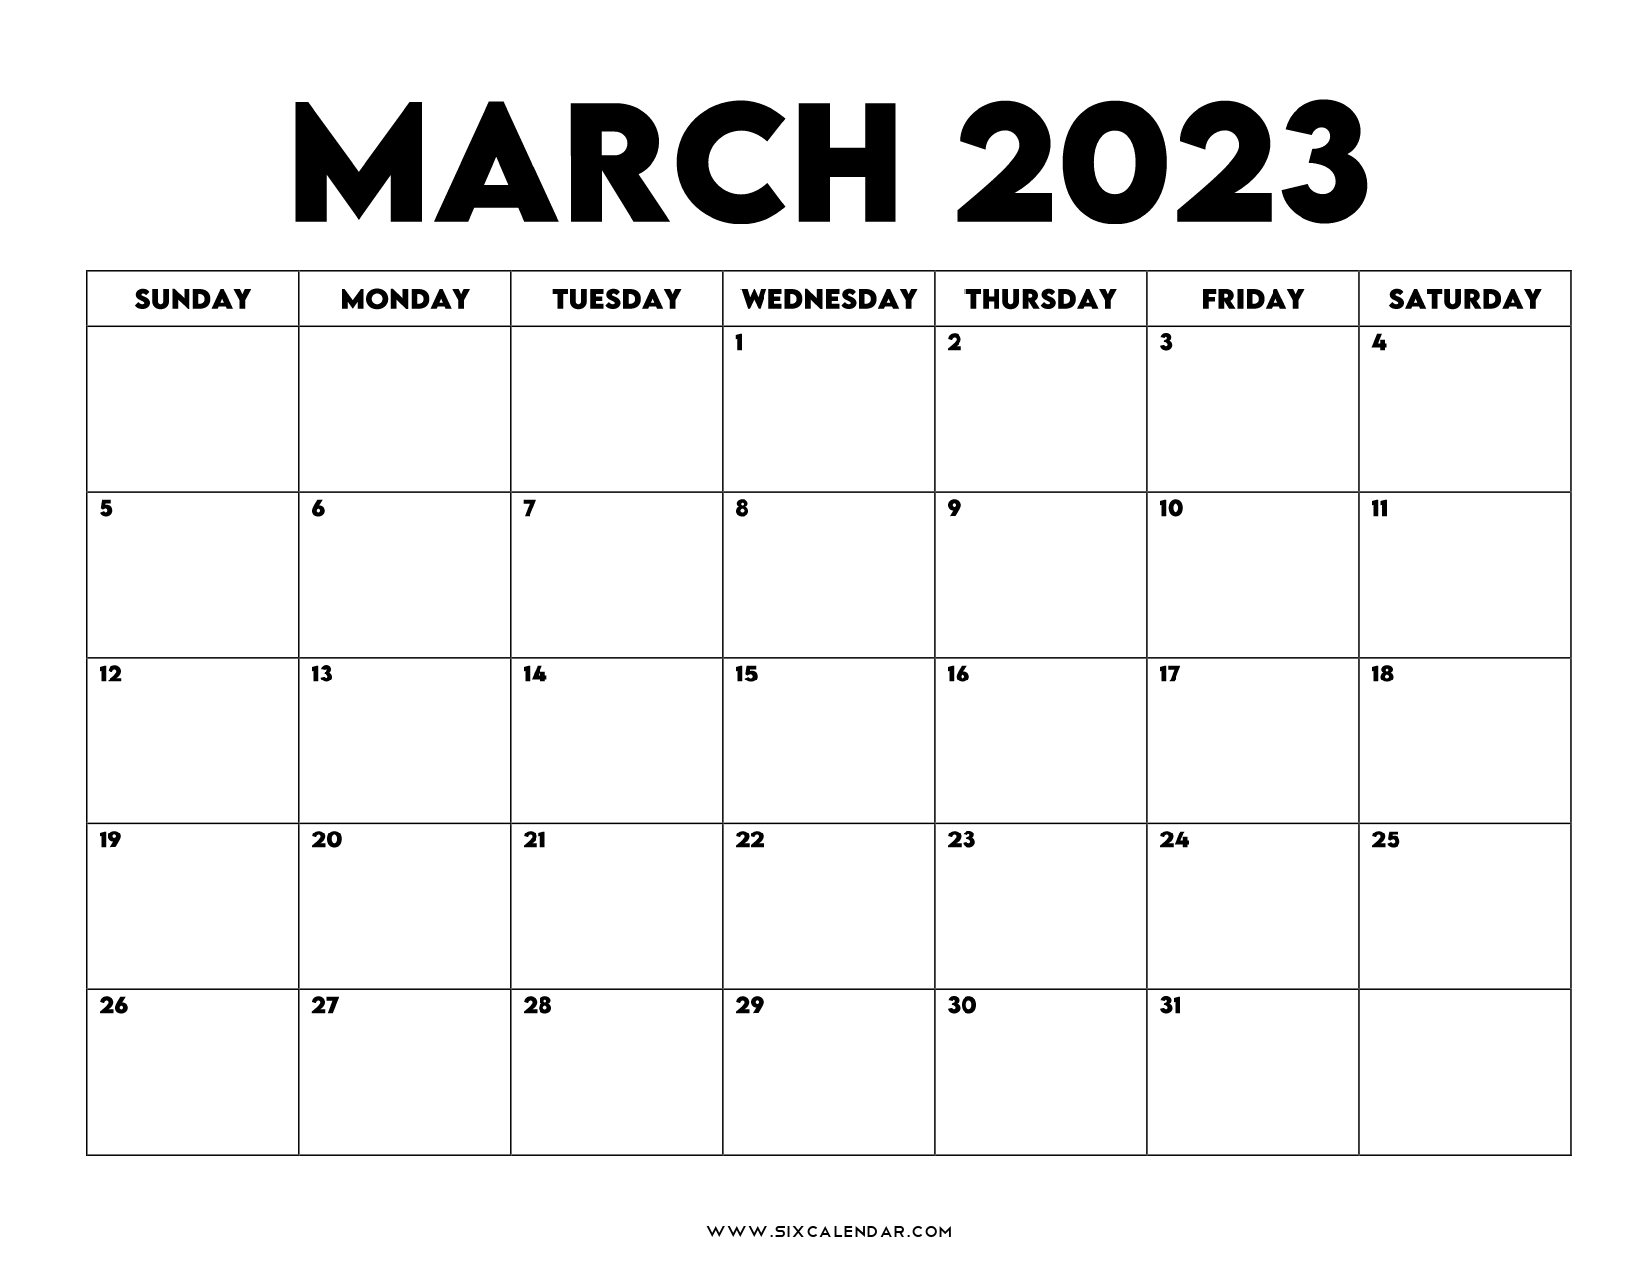 March 2023 Calendar PDF, March Calendar Printable with Holidays